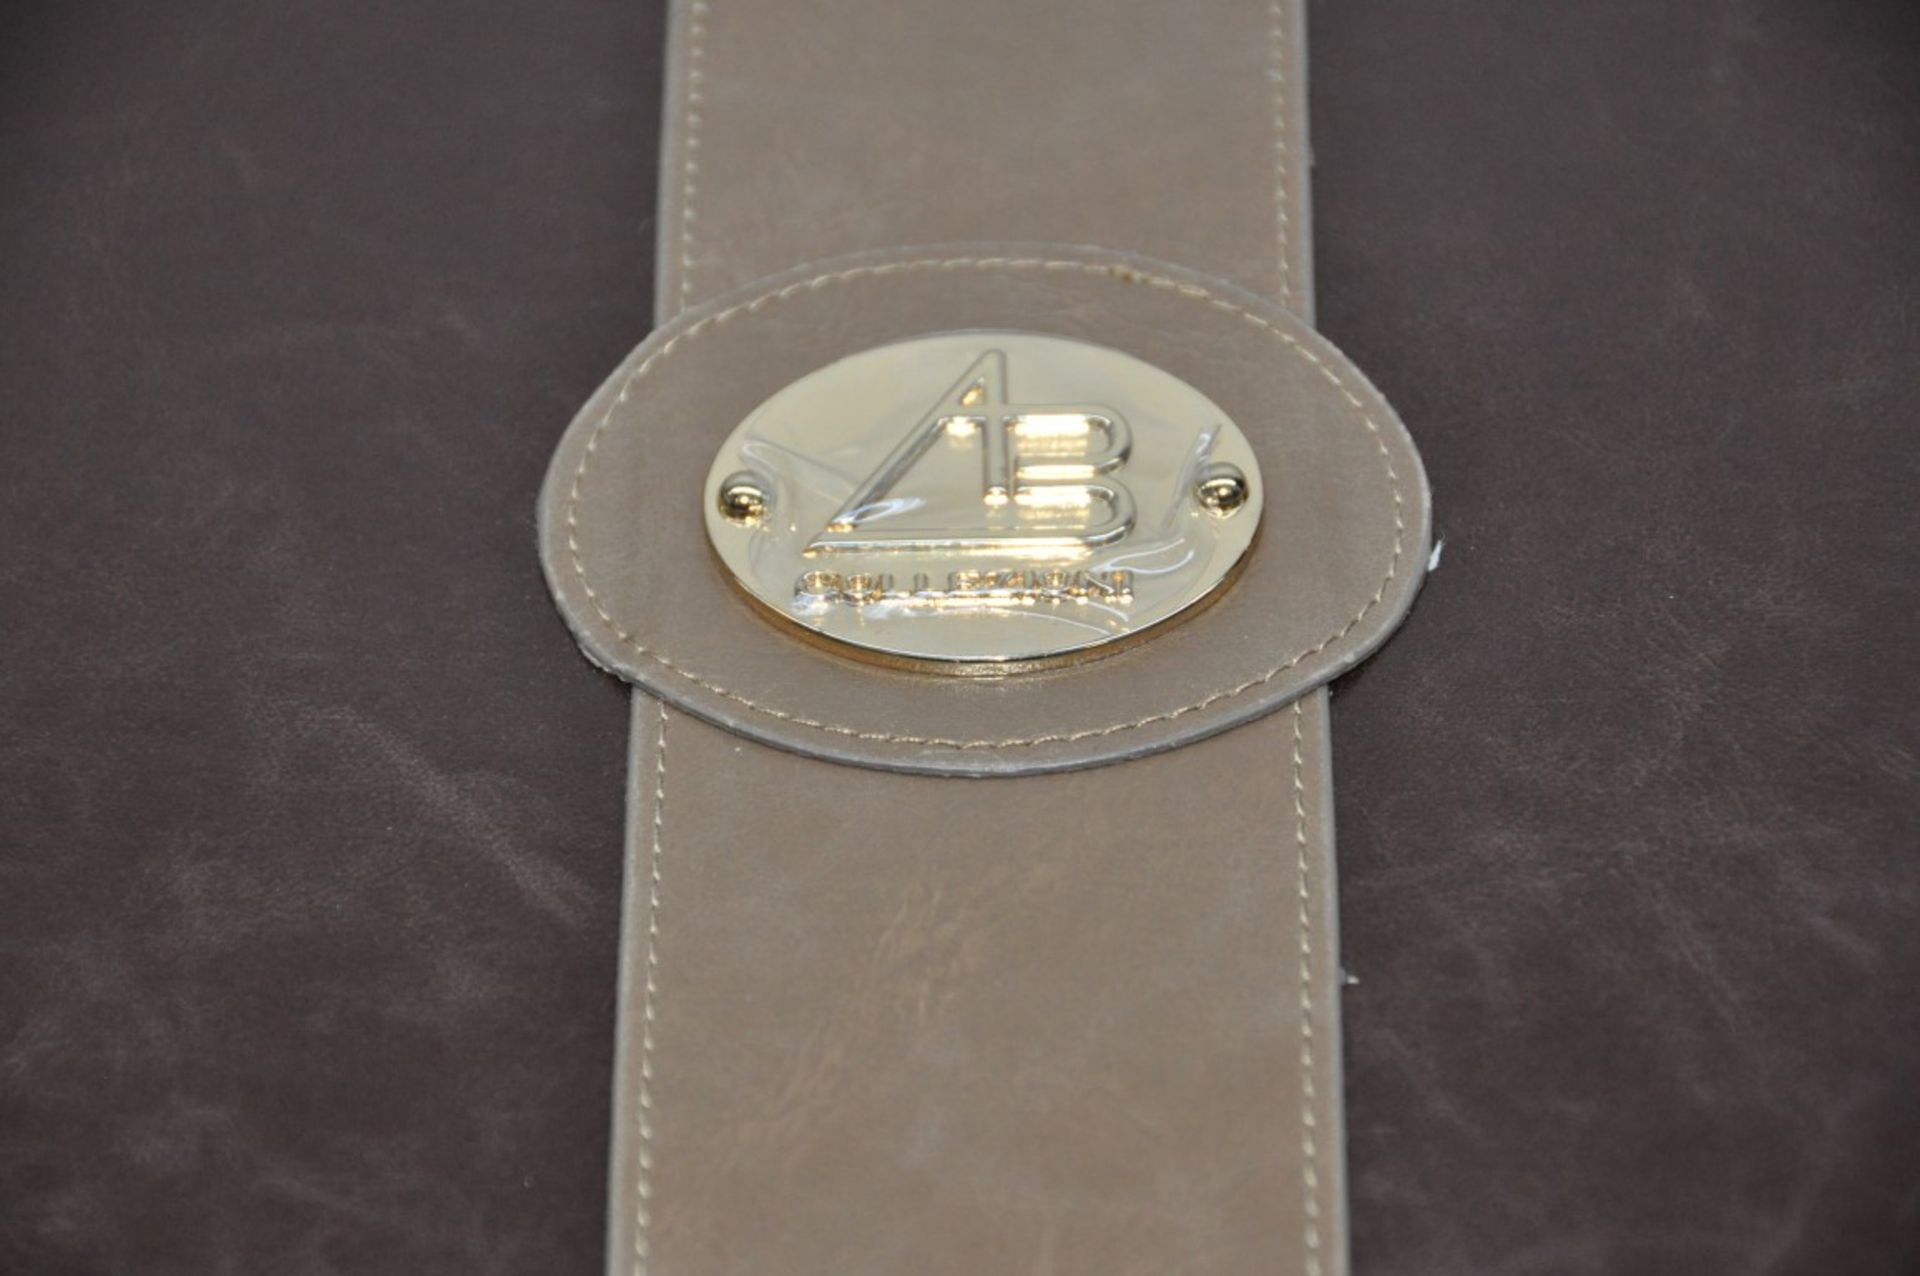 1 x "AB Collezioni" Italian Genuine Leather & Suede Luxury Jewellery Box (34044) - Ref LT000 - - Image 8 of 9